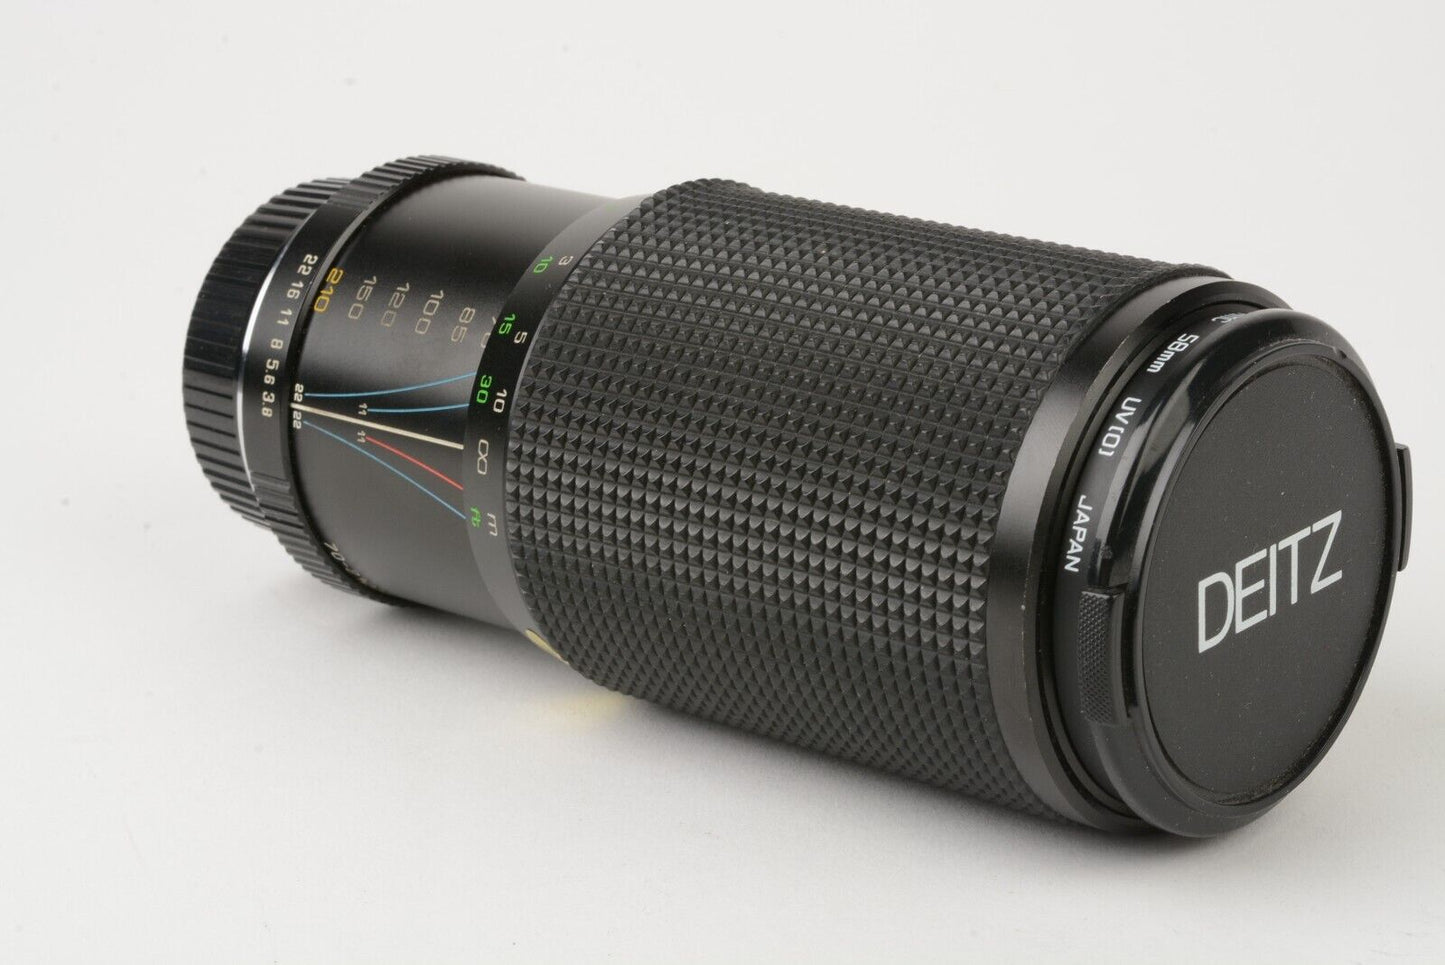 EXC++ DEITZ 70-210mm f3.8 MACRO ZOOM FOR PENTAX K MOUNT, UV+CAPS, NICE